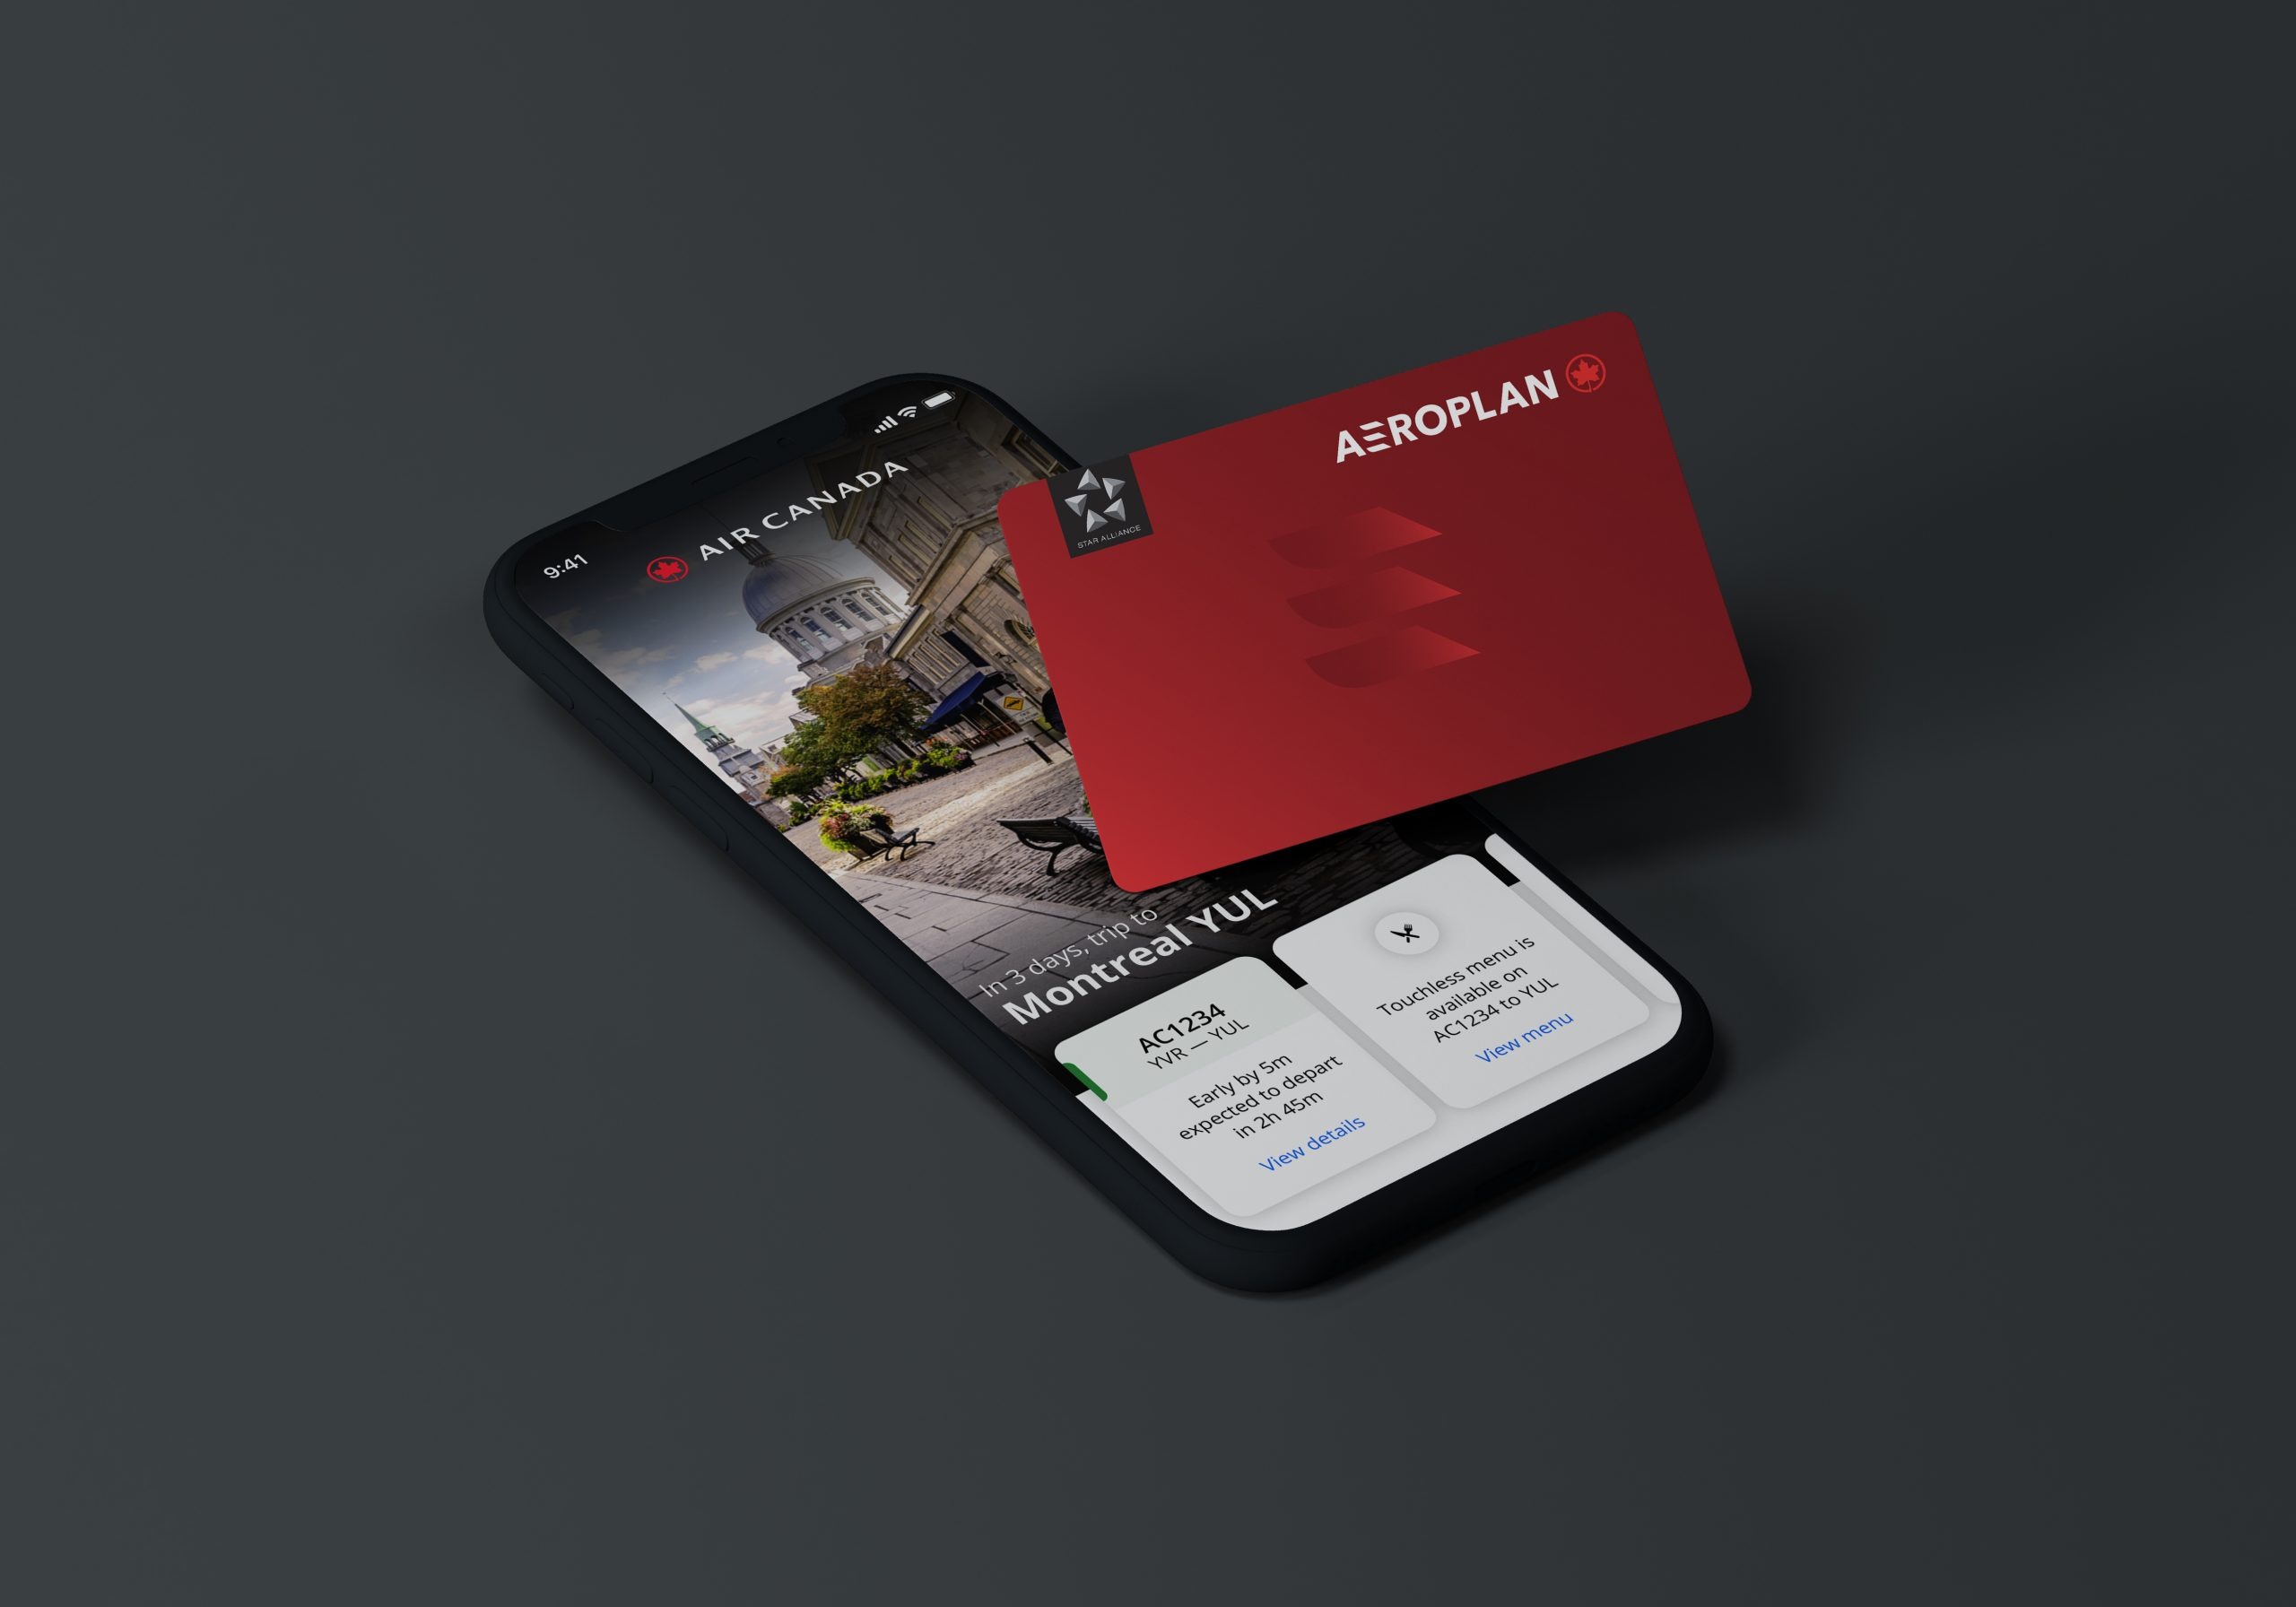 Air Canada app and Aeroplan card